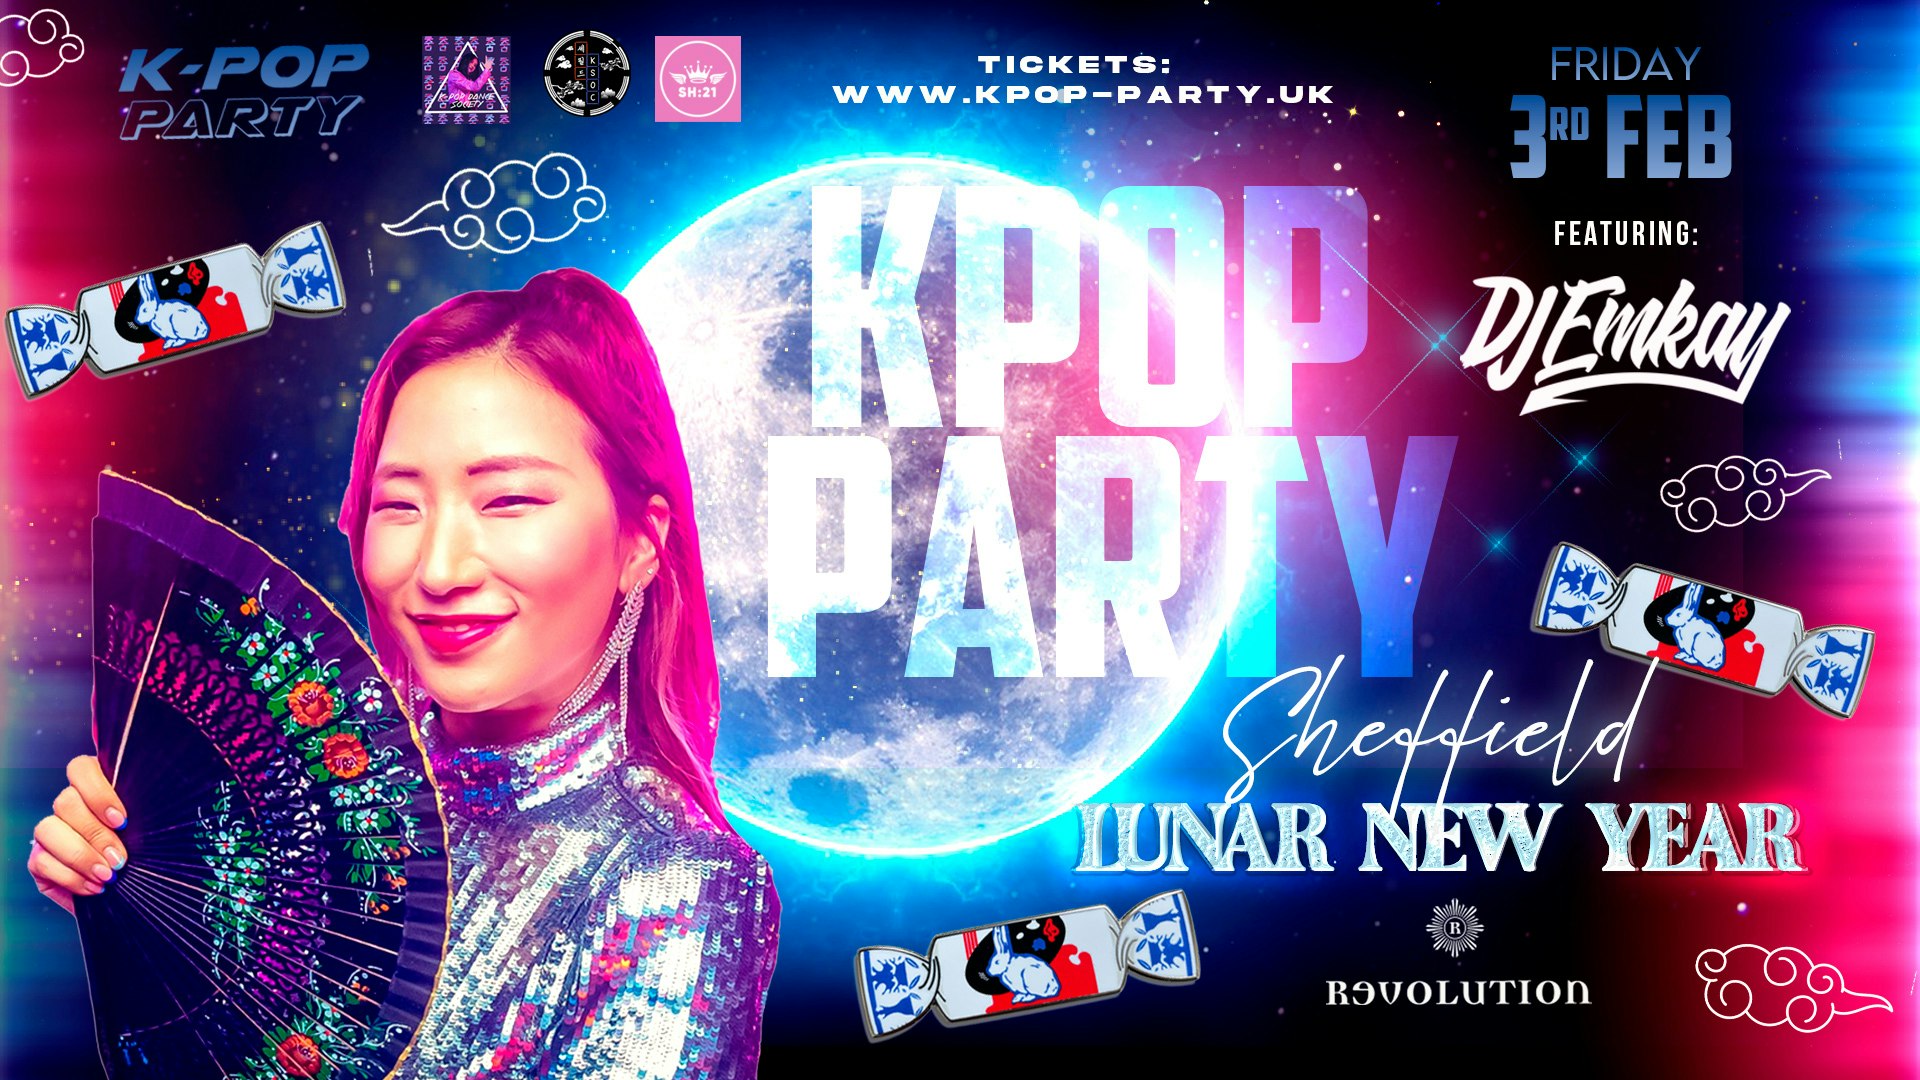 K-Pop Party Sheffield – LUNAR NEW YEAR with DJ EMKAY | Friday 3rd February